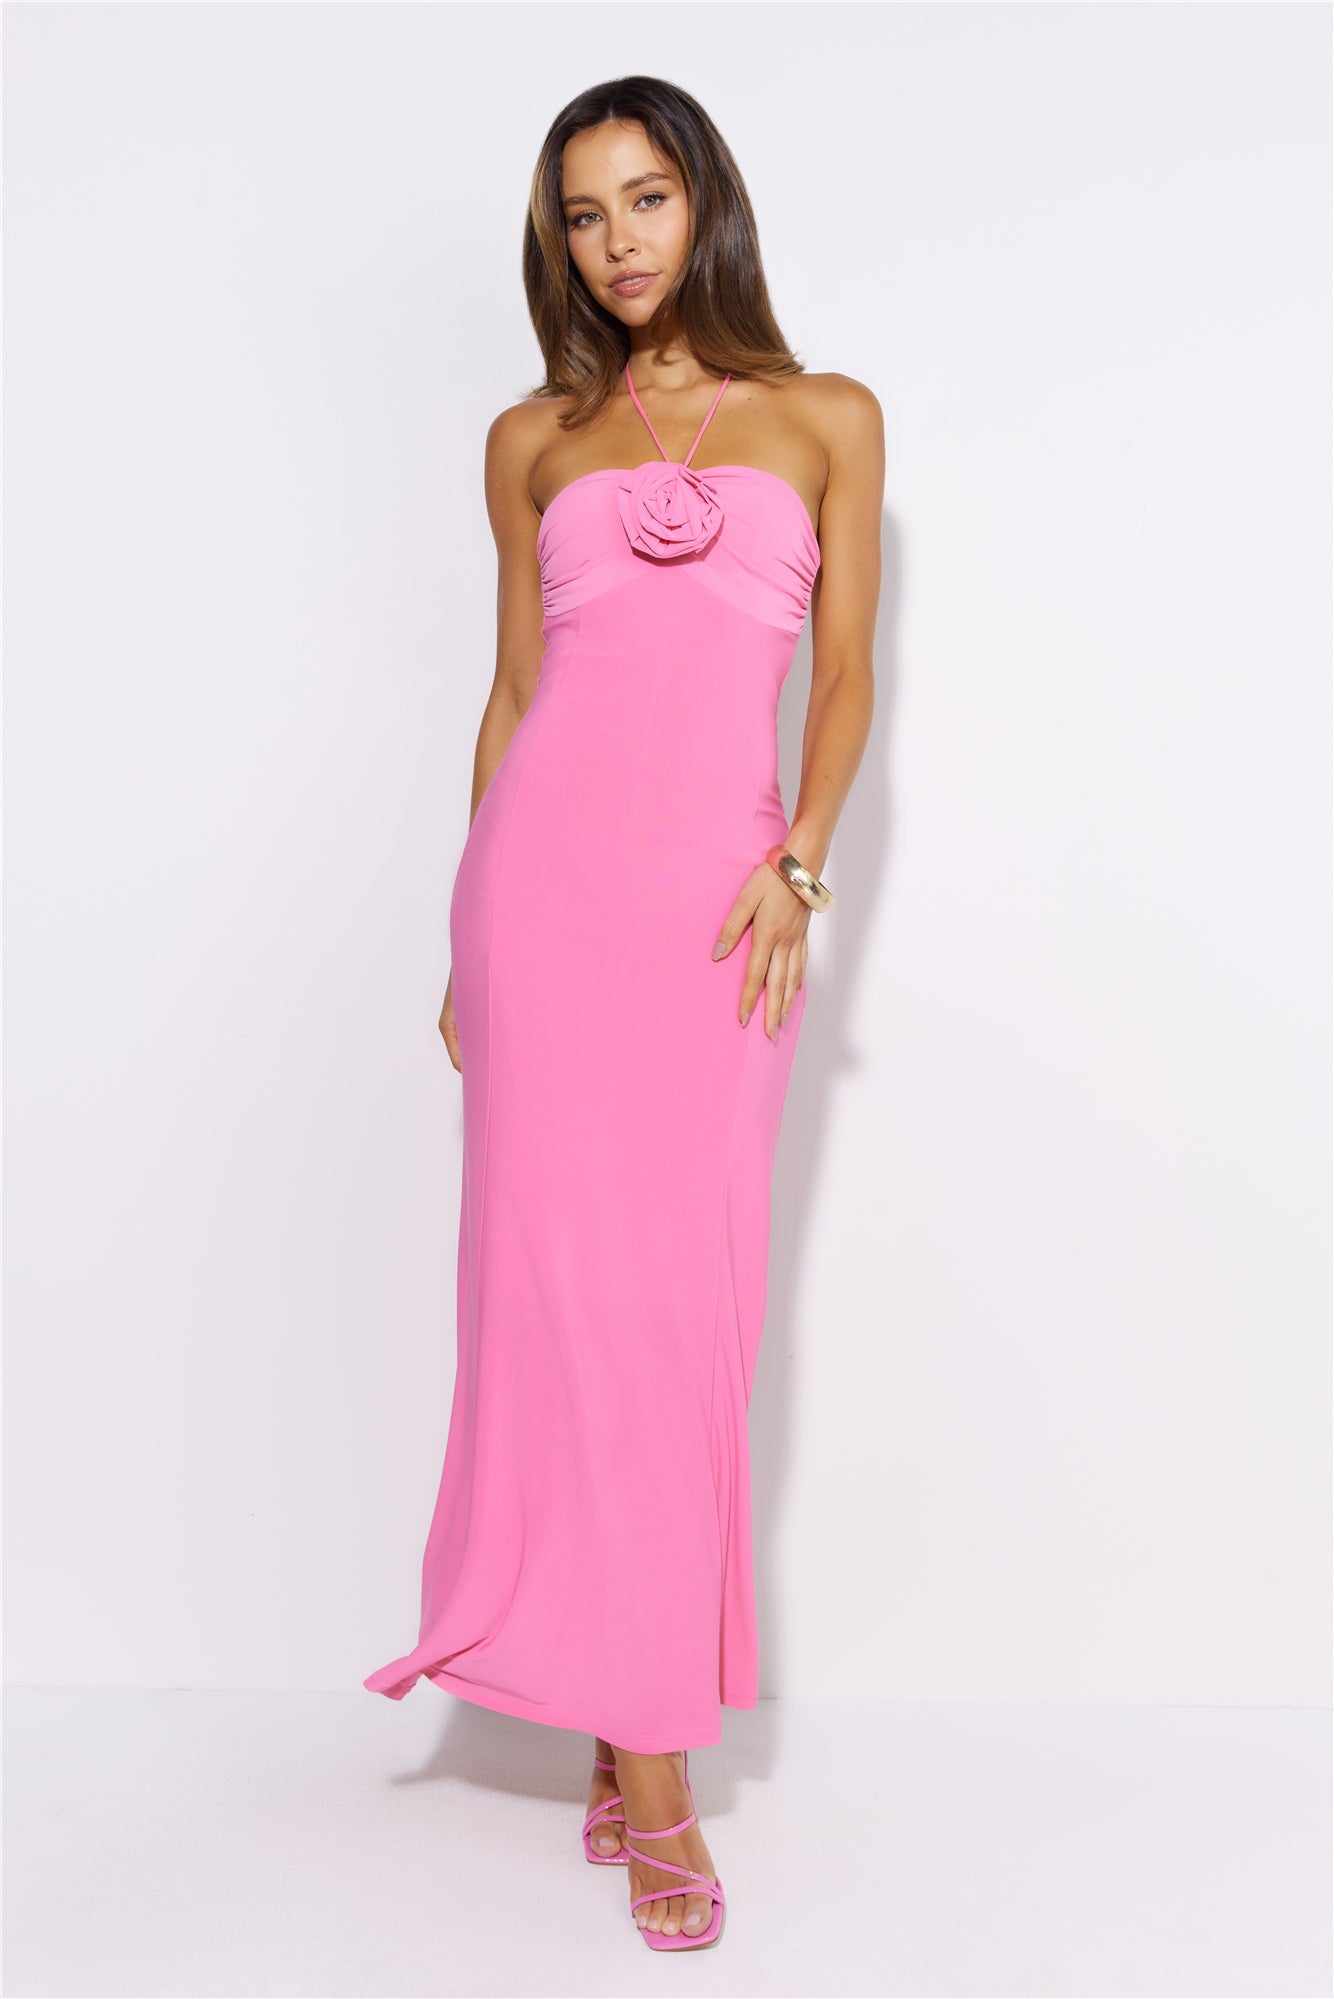 Simply Gorgeous Maxi Dress Pink